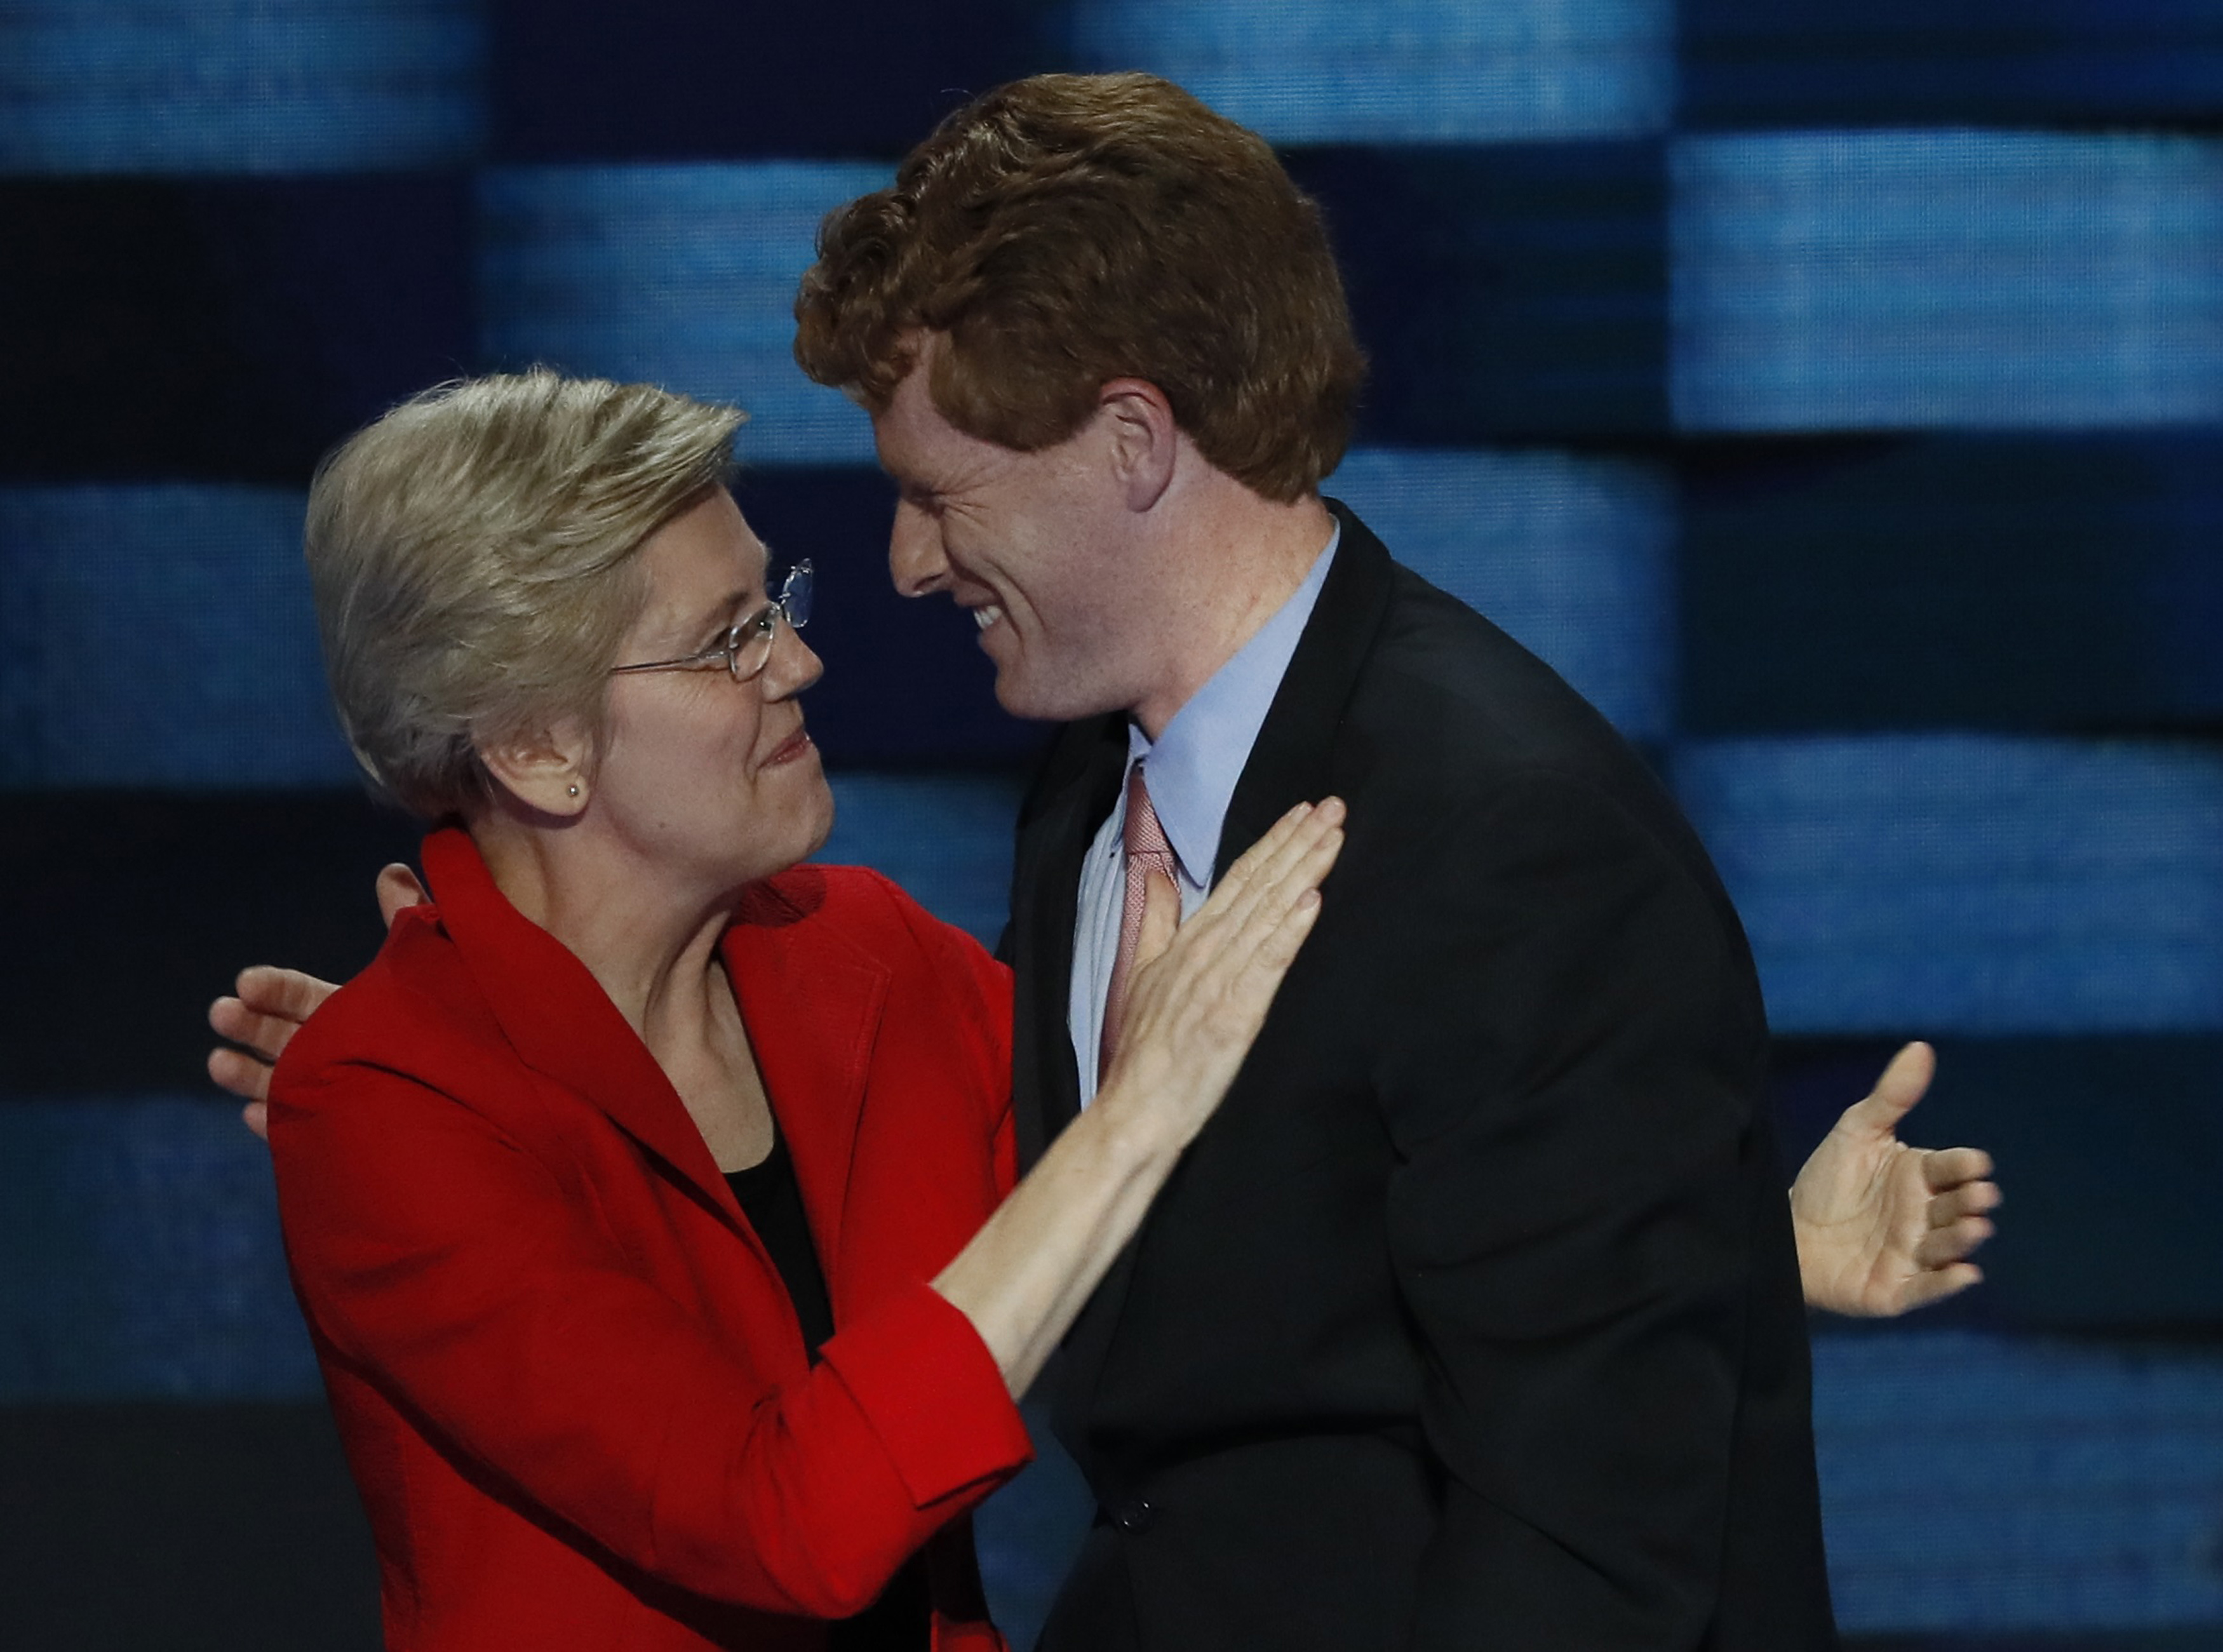 Sen. Elizabeth Warren embraces Rep. Joseph Kennedy at the Democratic National Convention in Philadelphia in 2016. REUTERS/Mike Segar